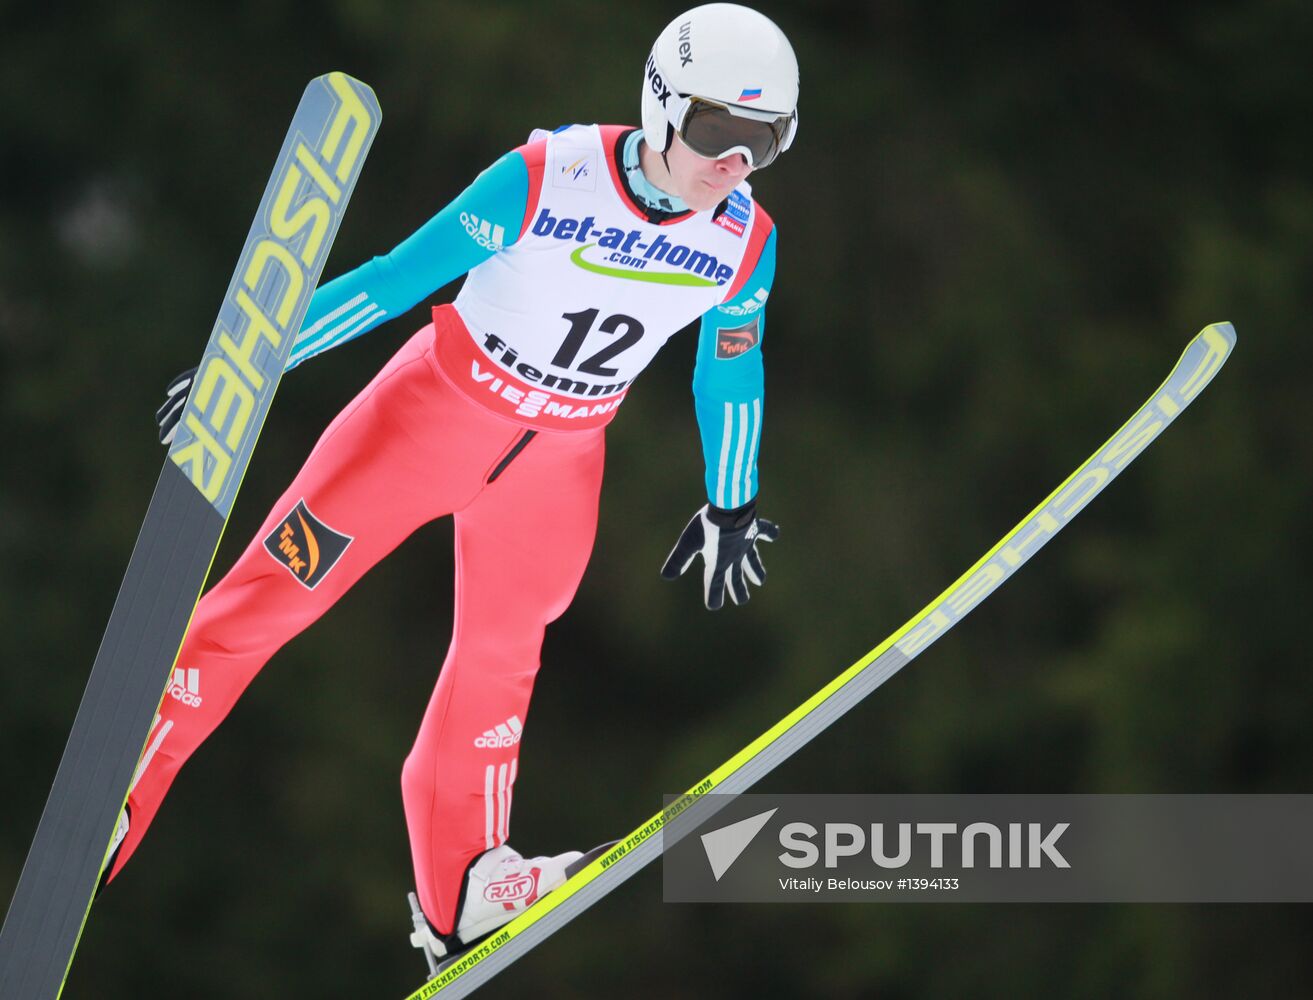 FIS Nordic World Ski Championships. Men's ski jumping